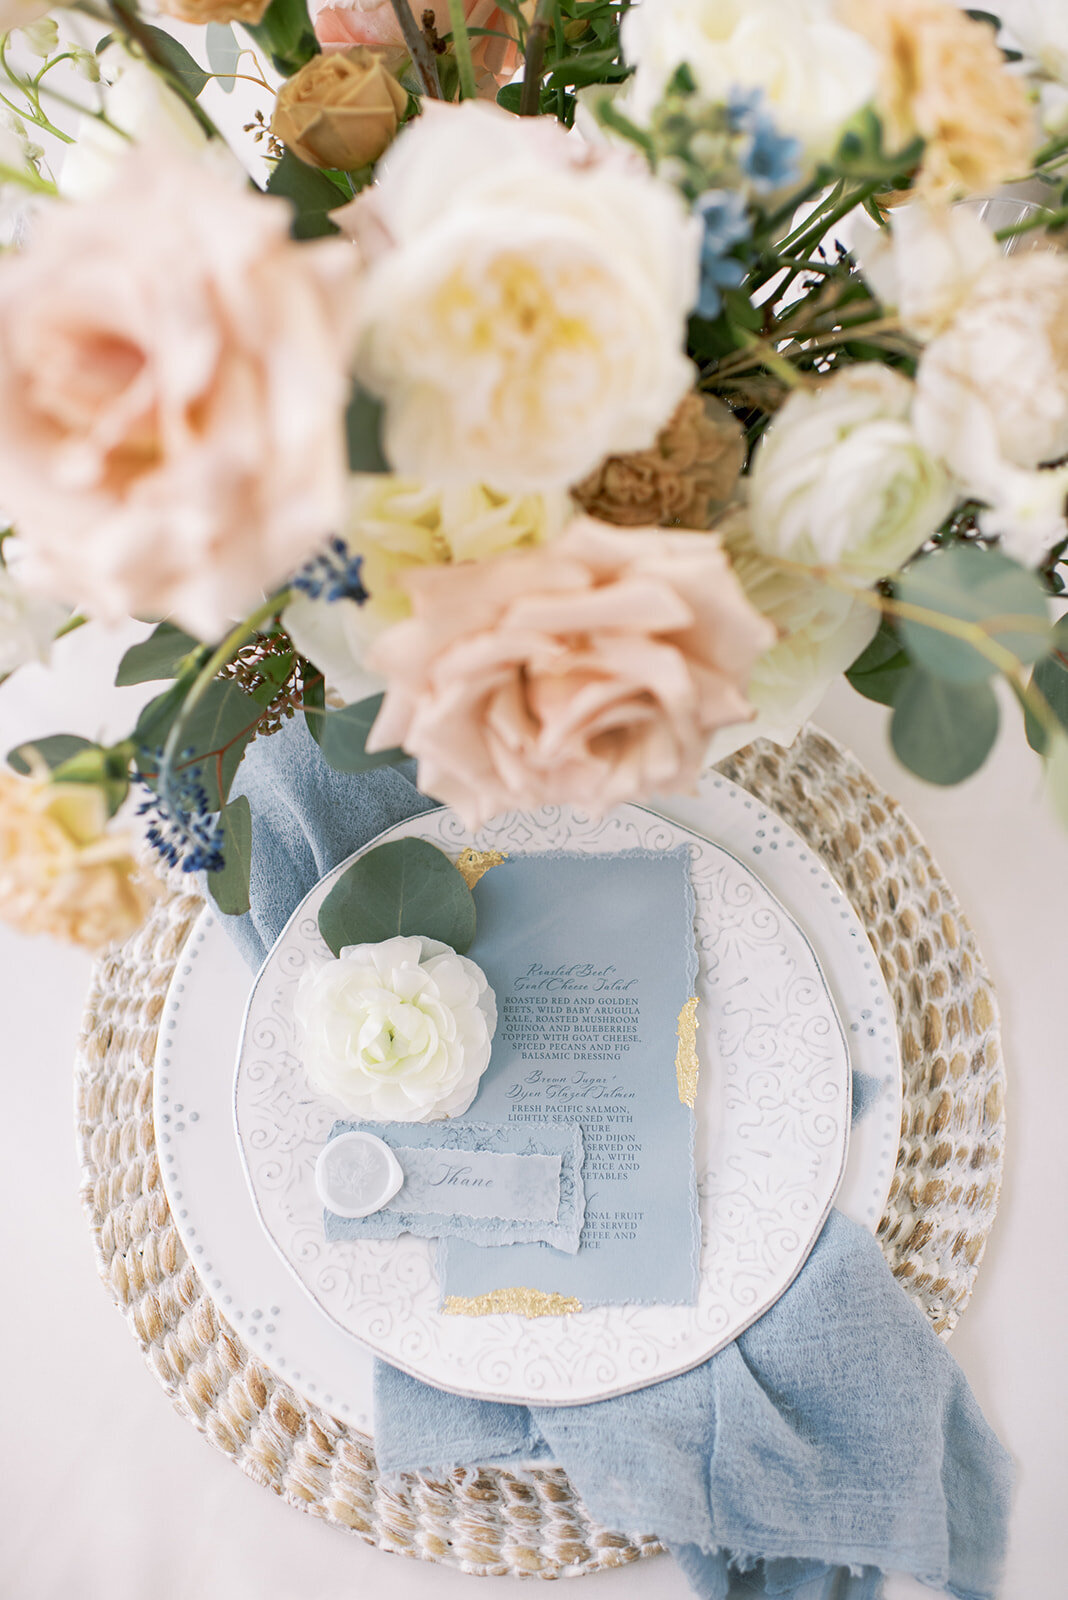 Edmonton-Wedding-Planner-Florals-With-Invitations